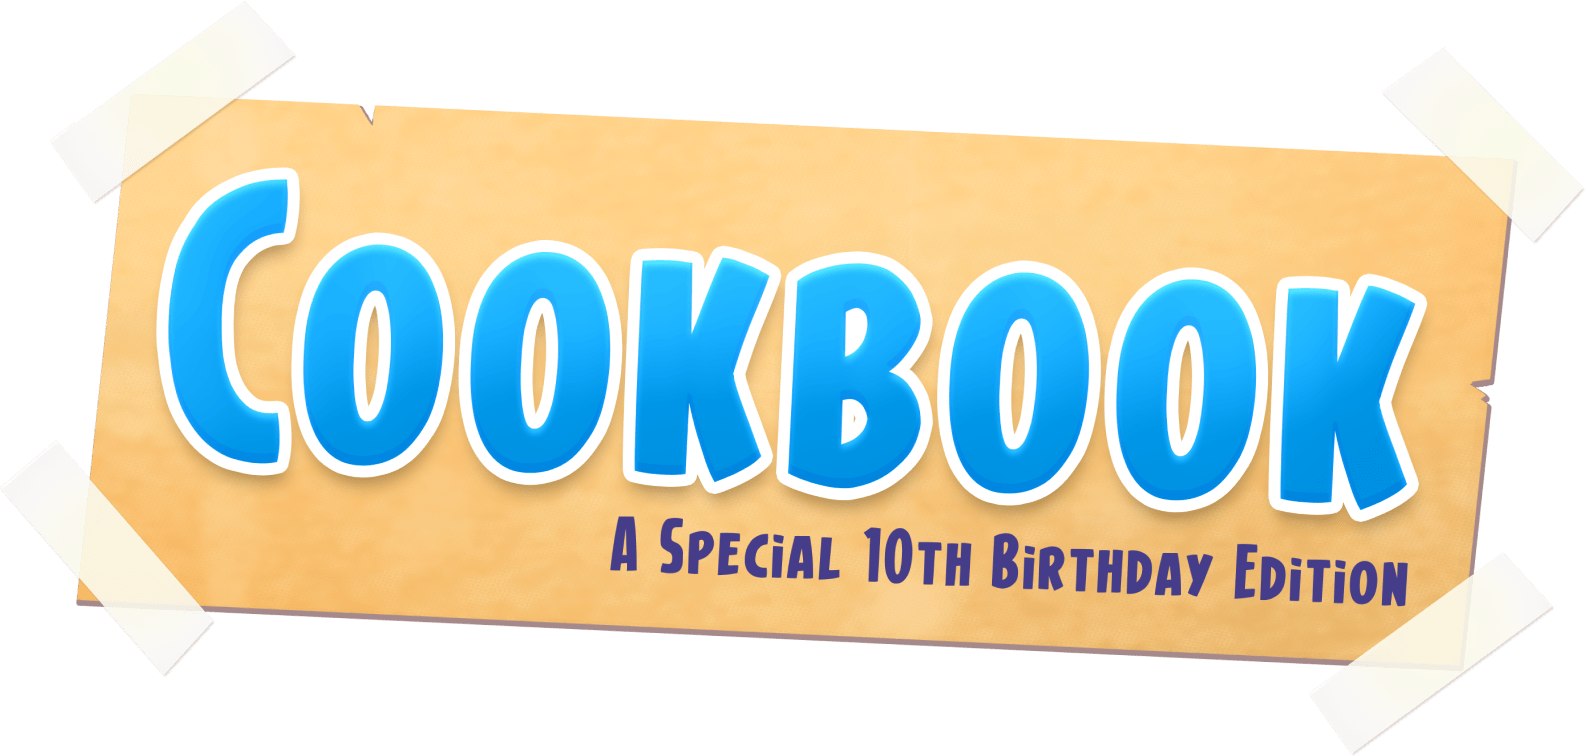 Cookbook sign